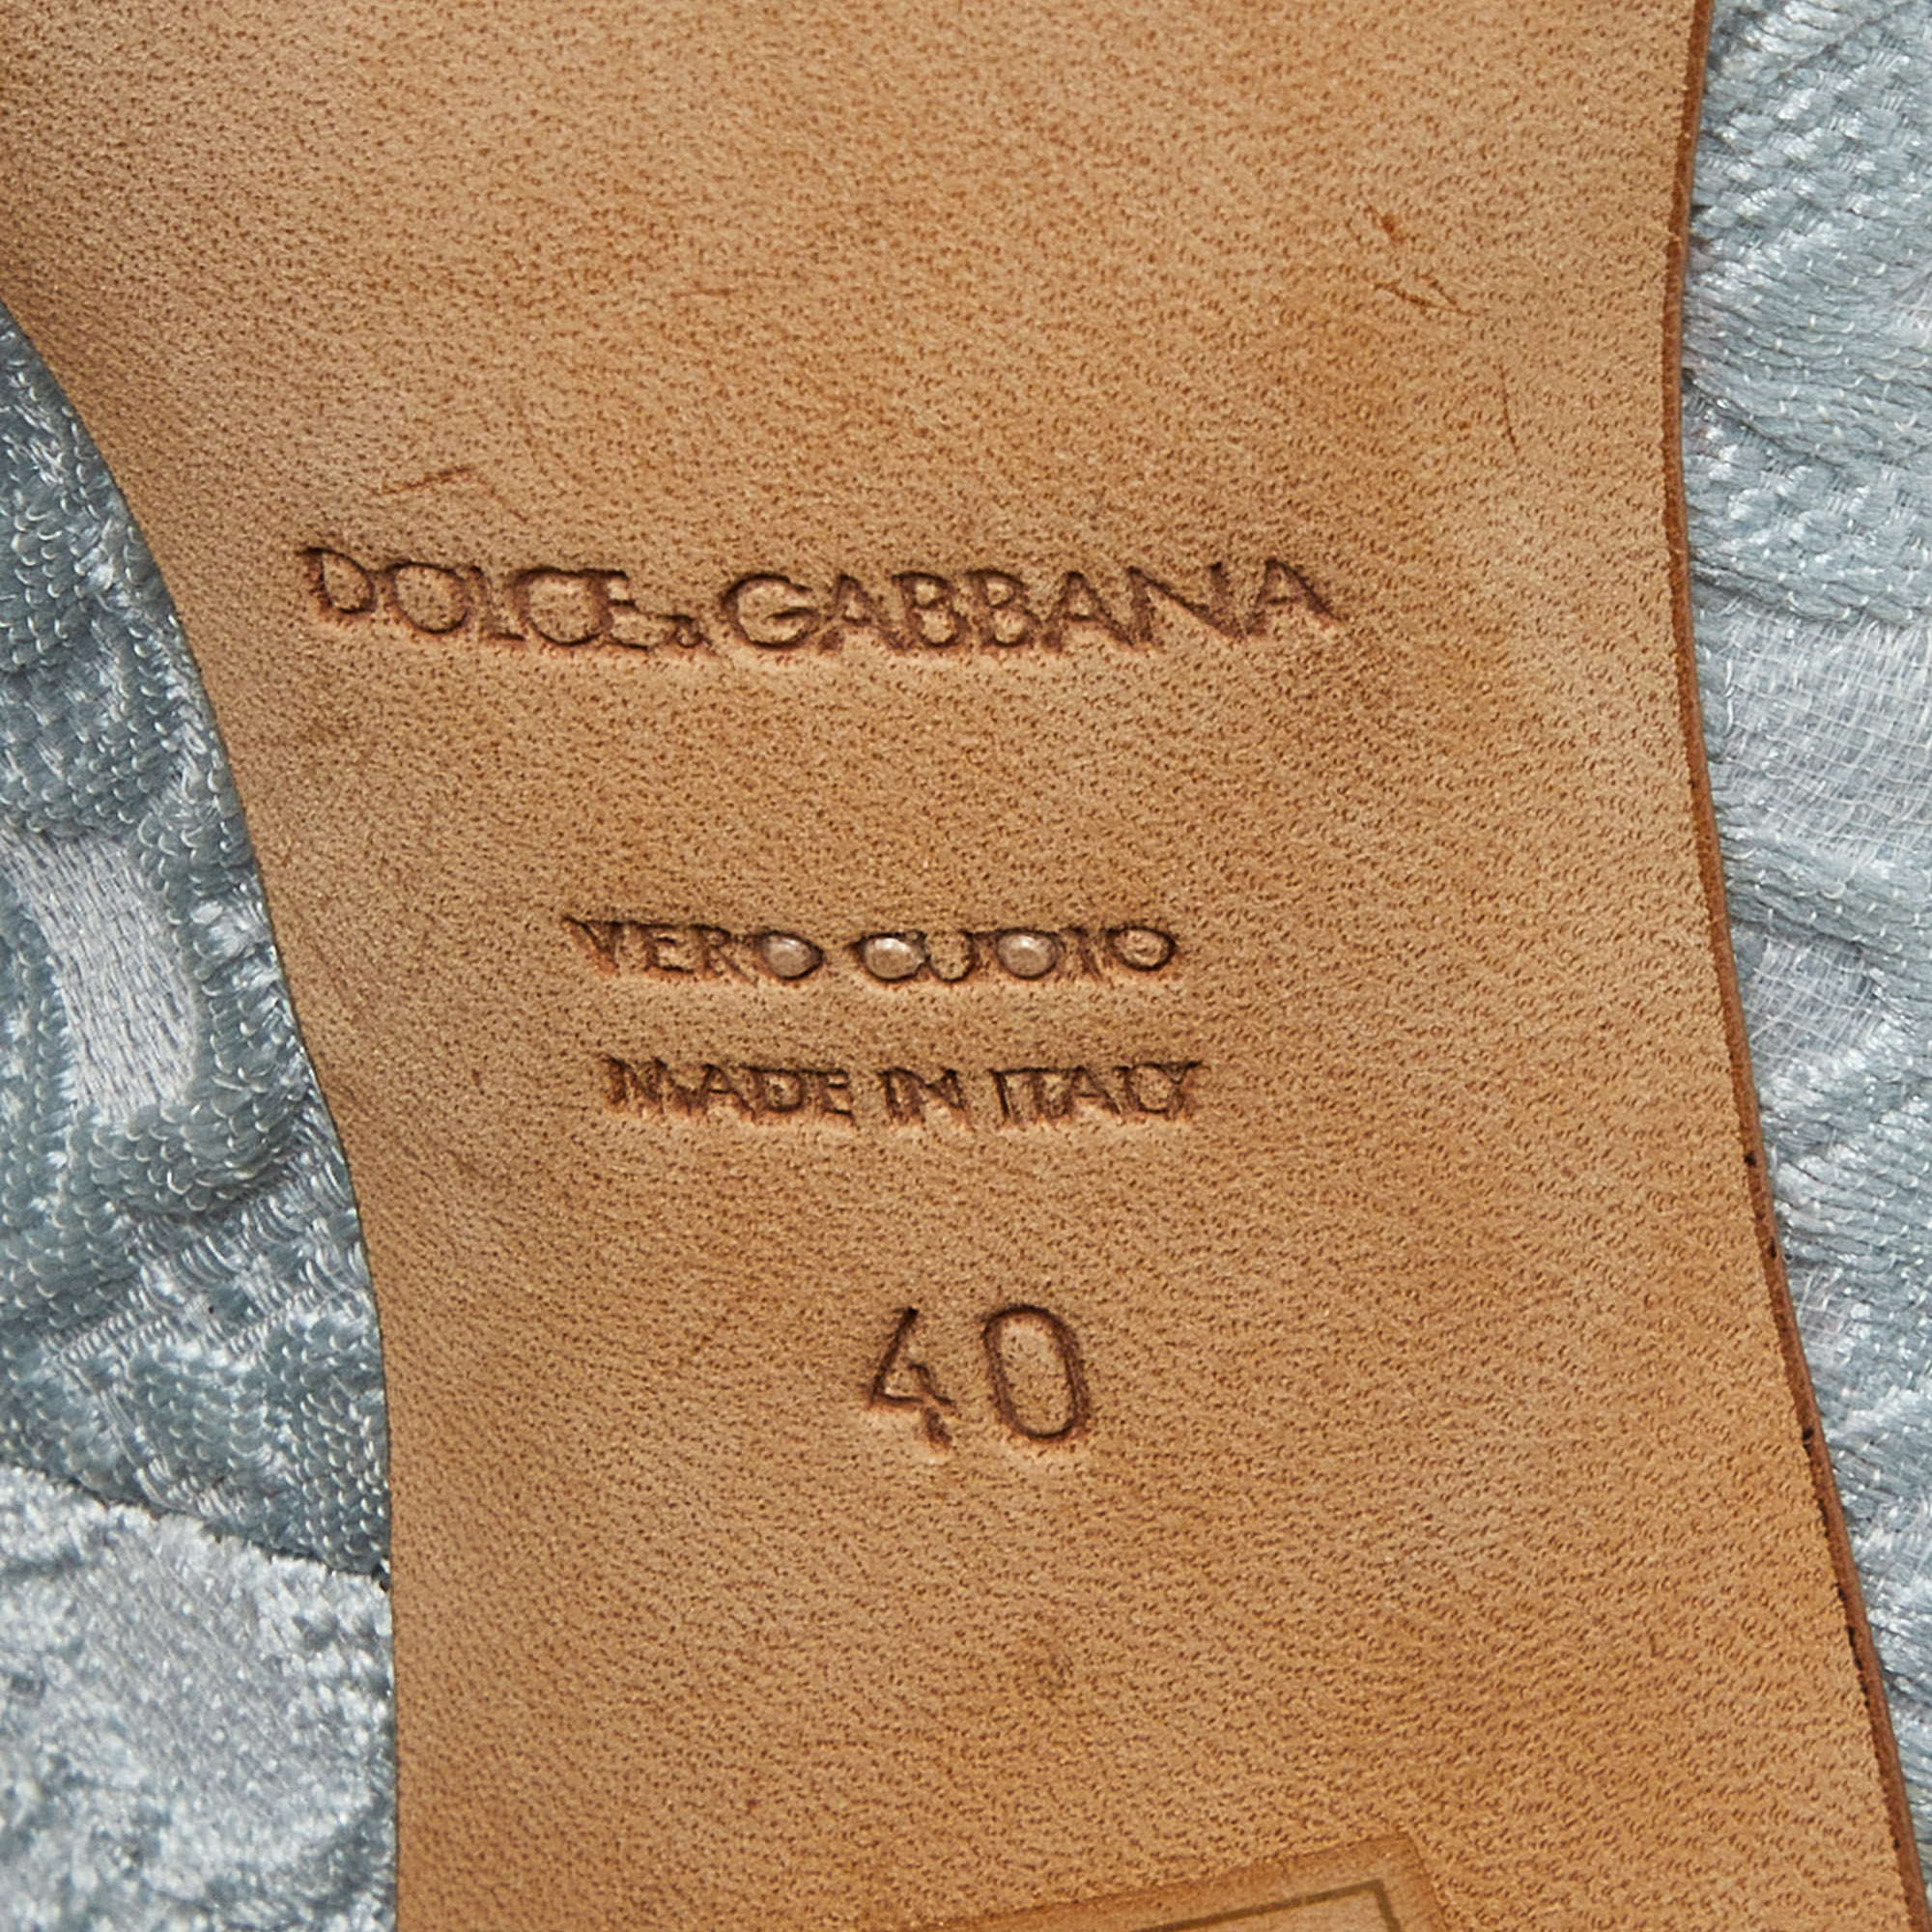 Dolce & Gabbana Light Blue Brocade Fabric Pointed Toe Pumps Size 40